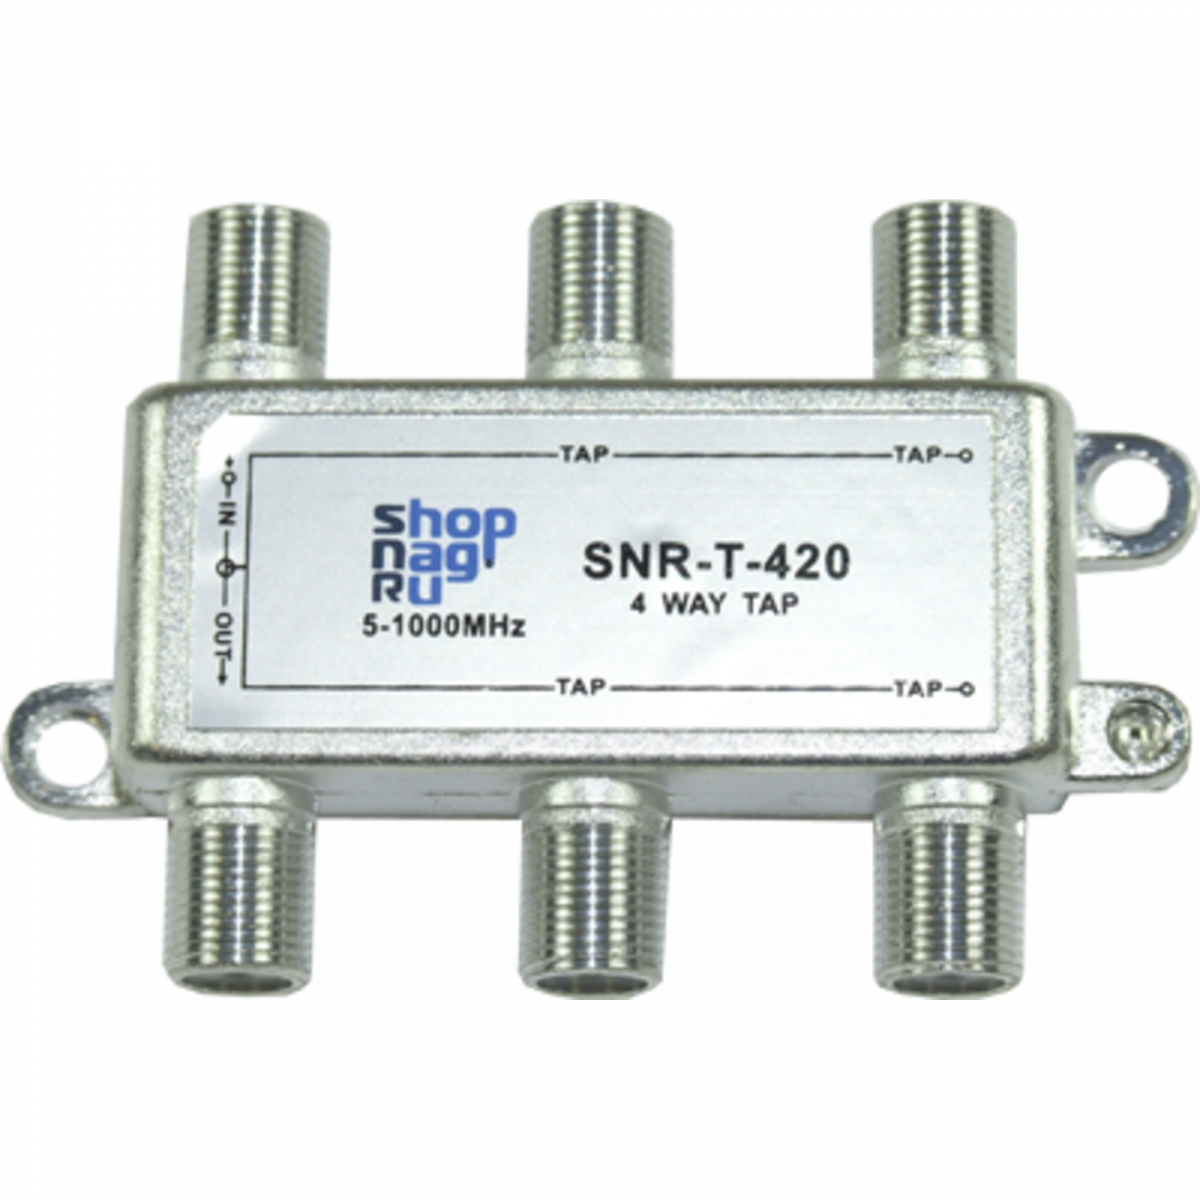 Ответвитель абонентский SNR-T-820 на 8 отводов, вносимое затухание IN-TAP 20dB.